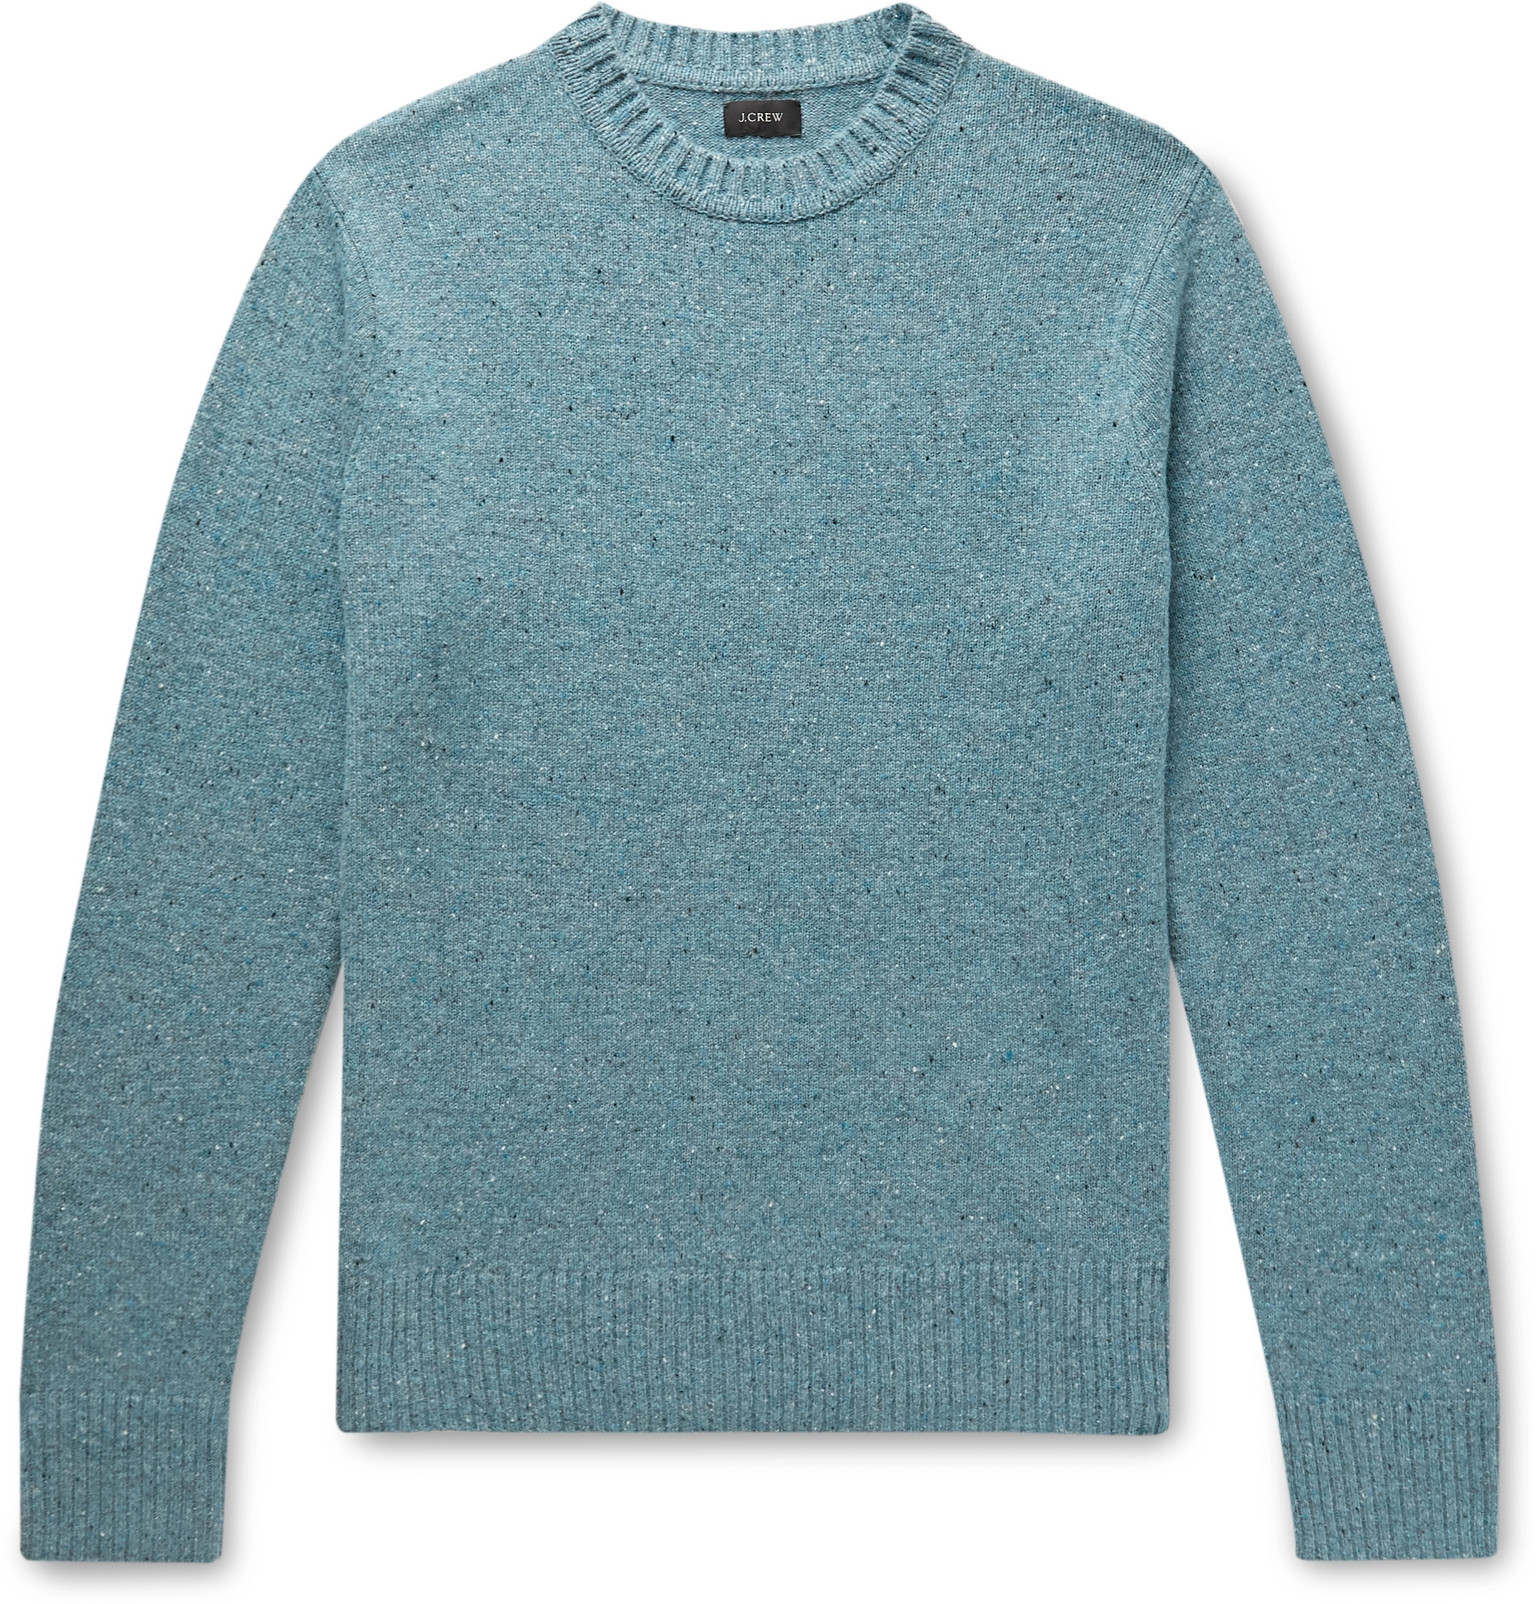 J.Crew - Mélange Merino Wool-Blend Sweater - Men - Blue | The Fashionisto